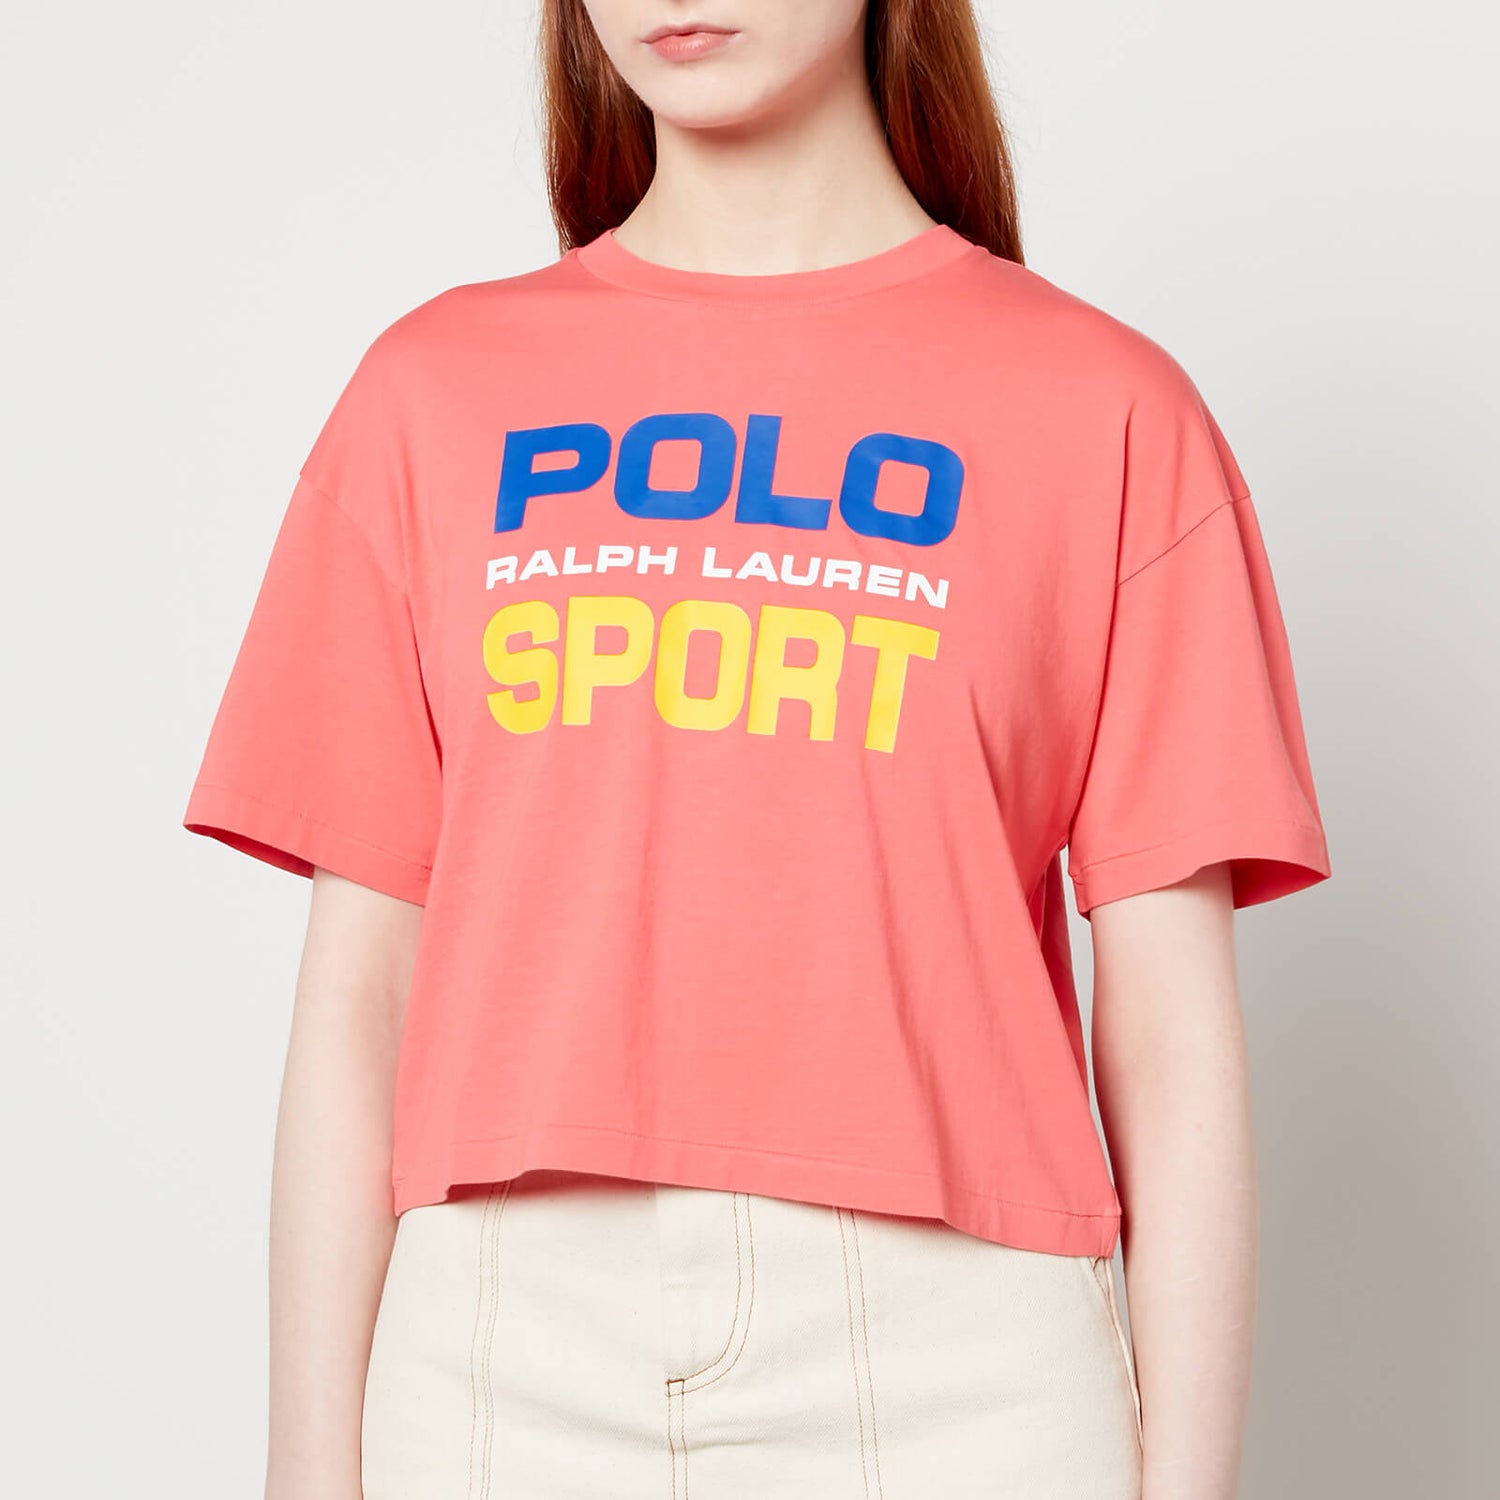 Polo Ralph Lauren Women's Polo Sport Cropped T-Shirt - Amalfi Red - S